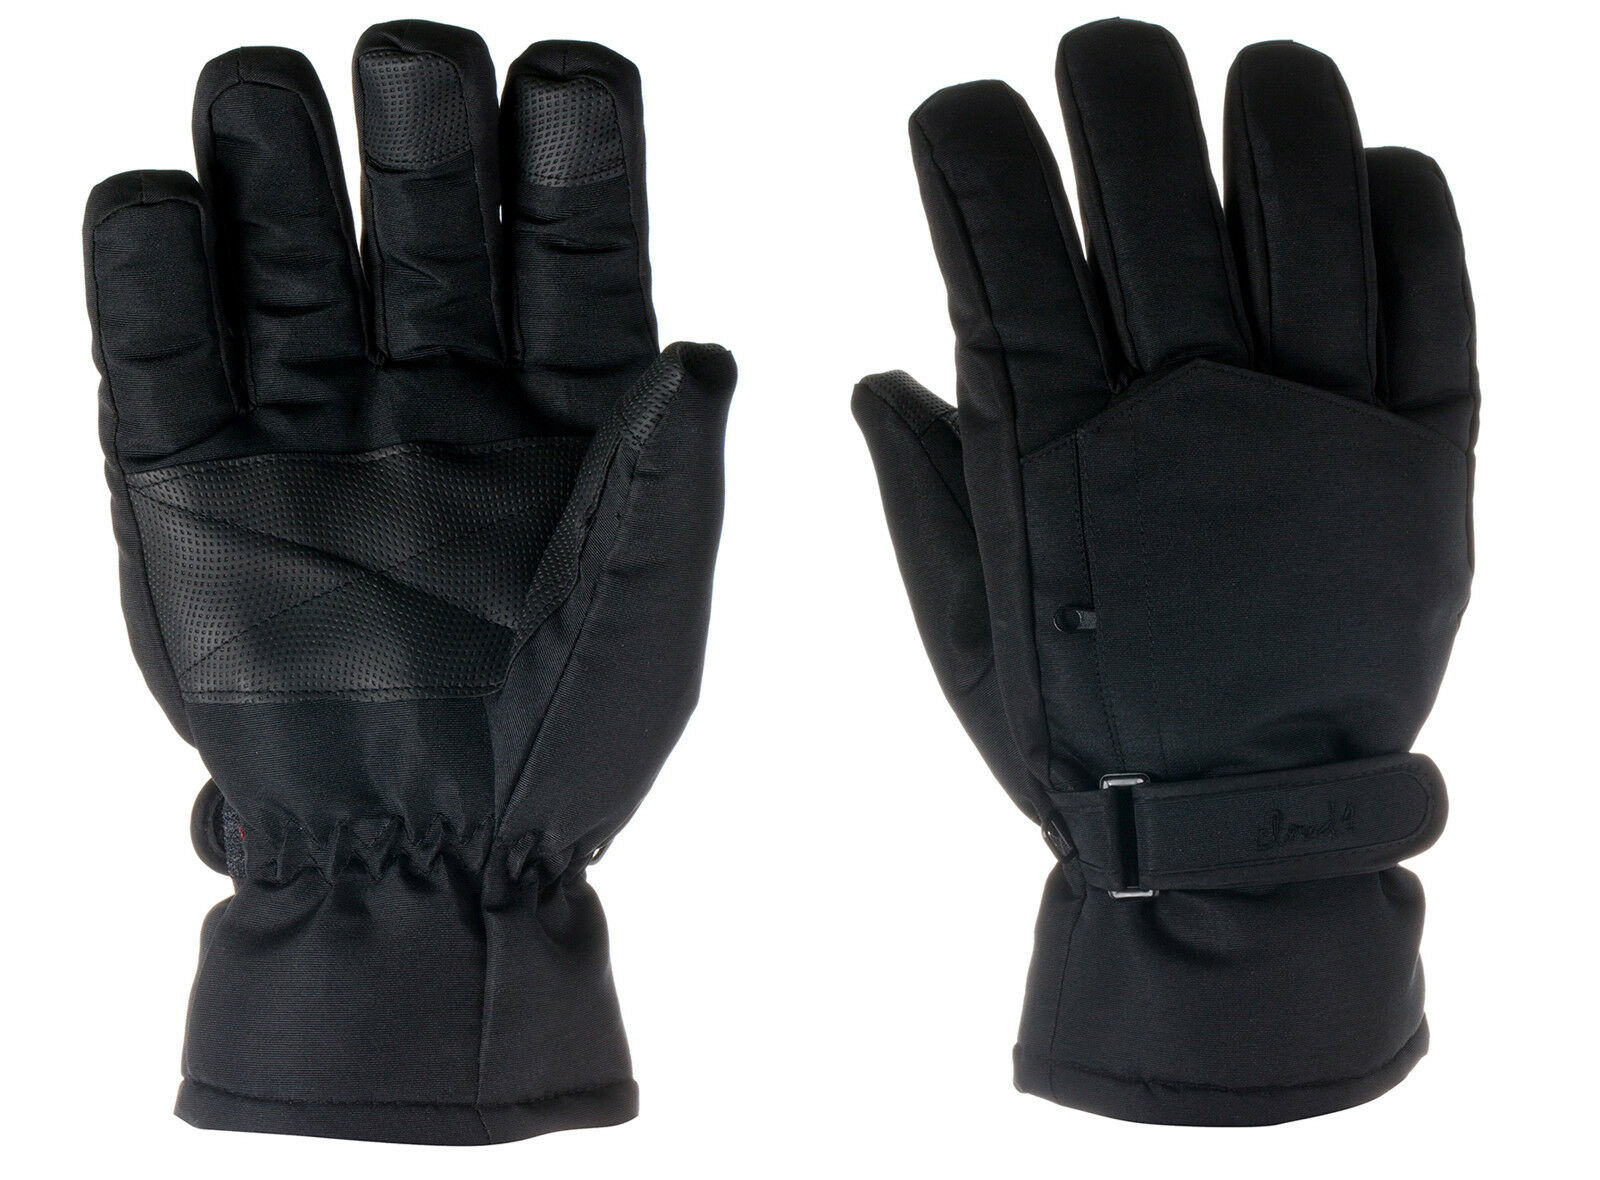 New 3m Thinsulate Waterproof Insulated Ski Snow Gloves Men Women Black